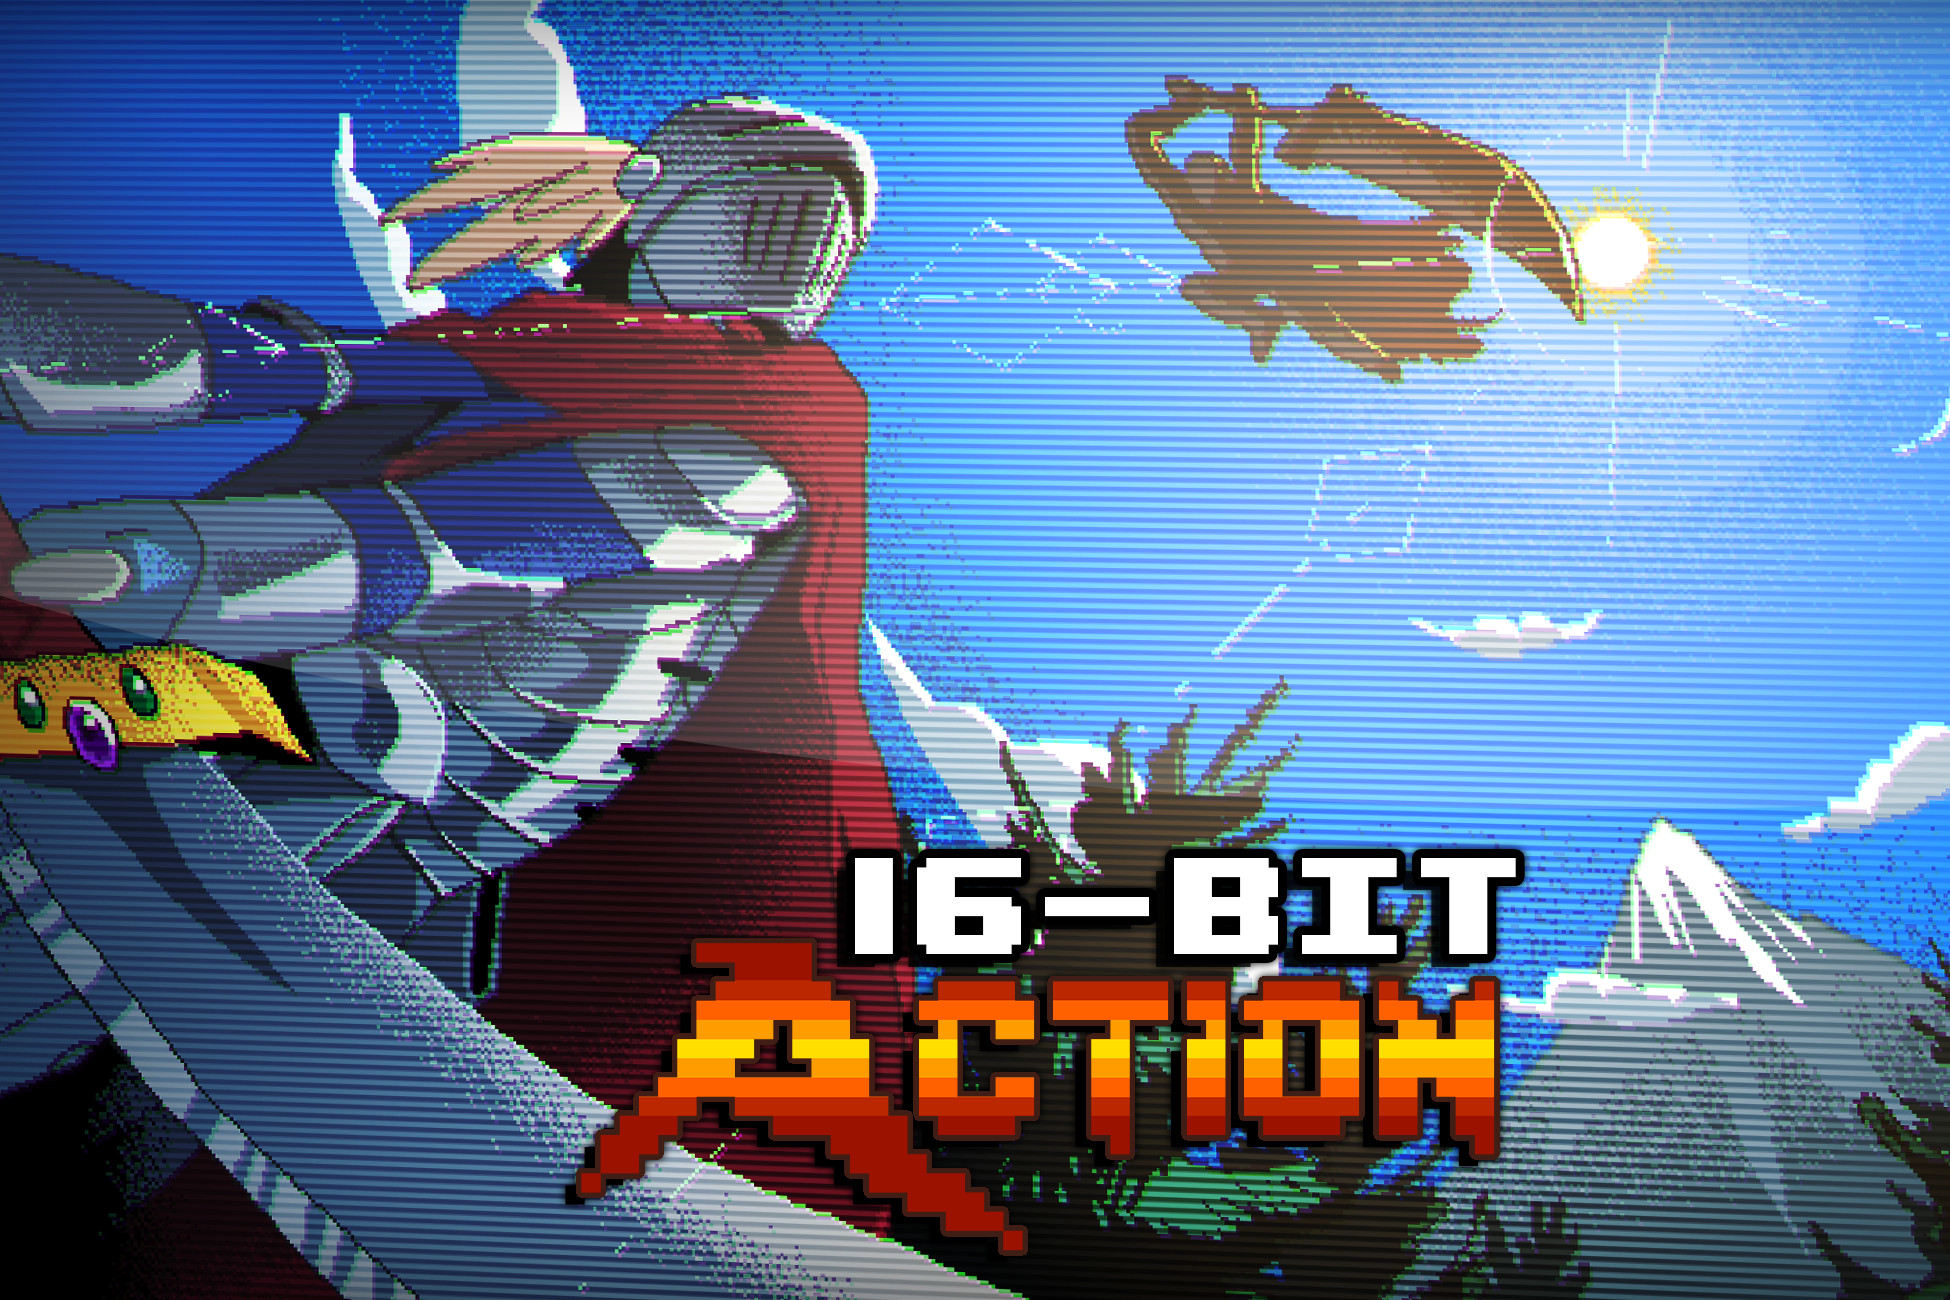 16-Bit Action Music Pack